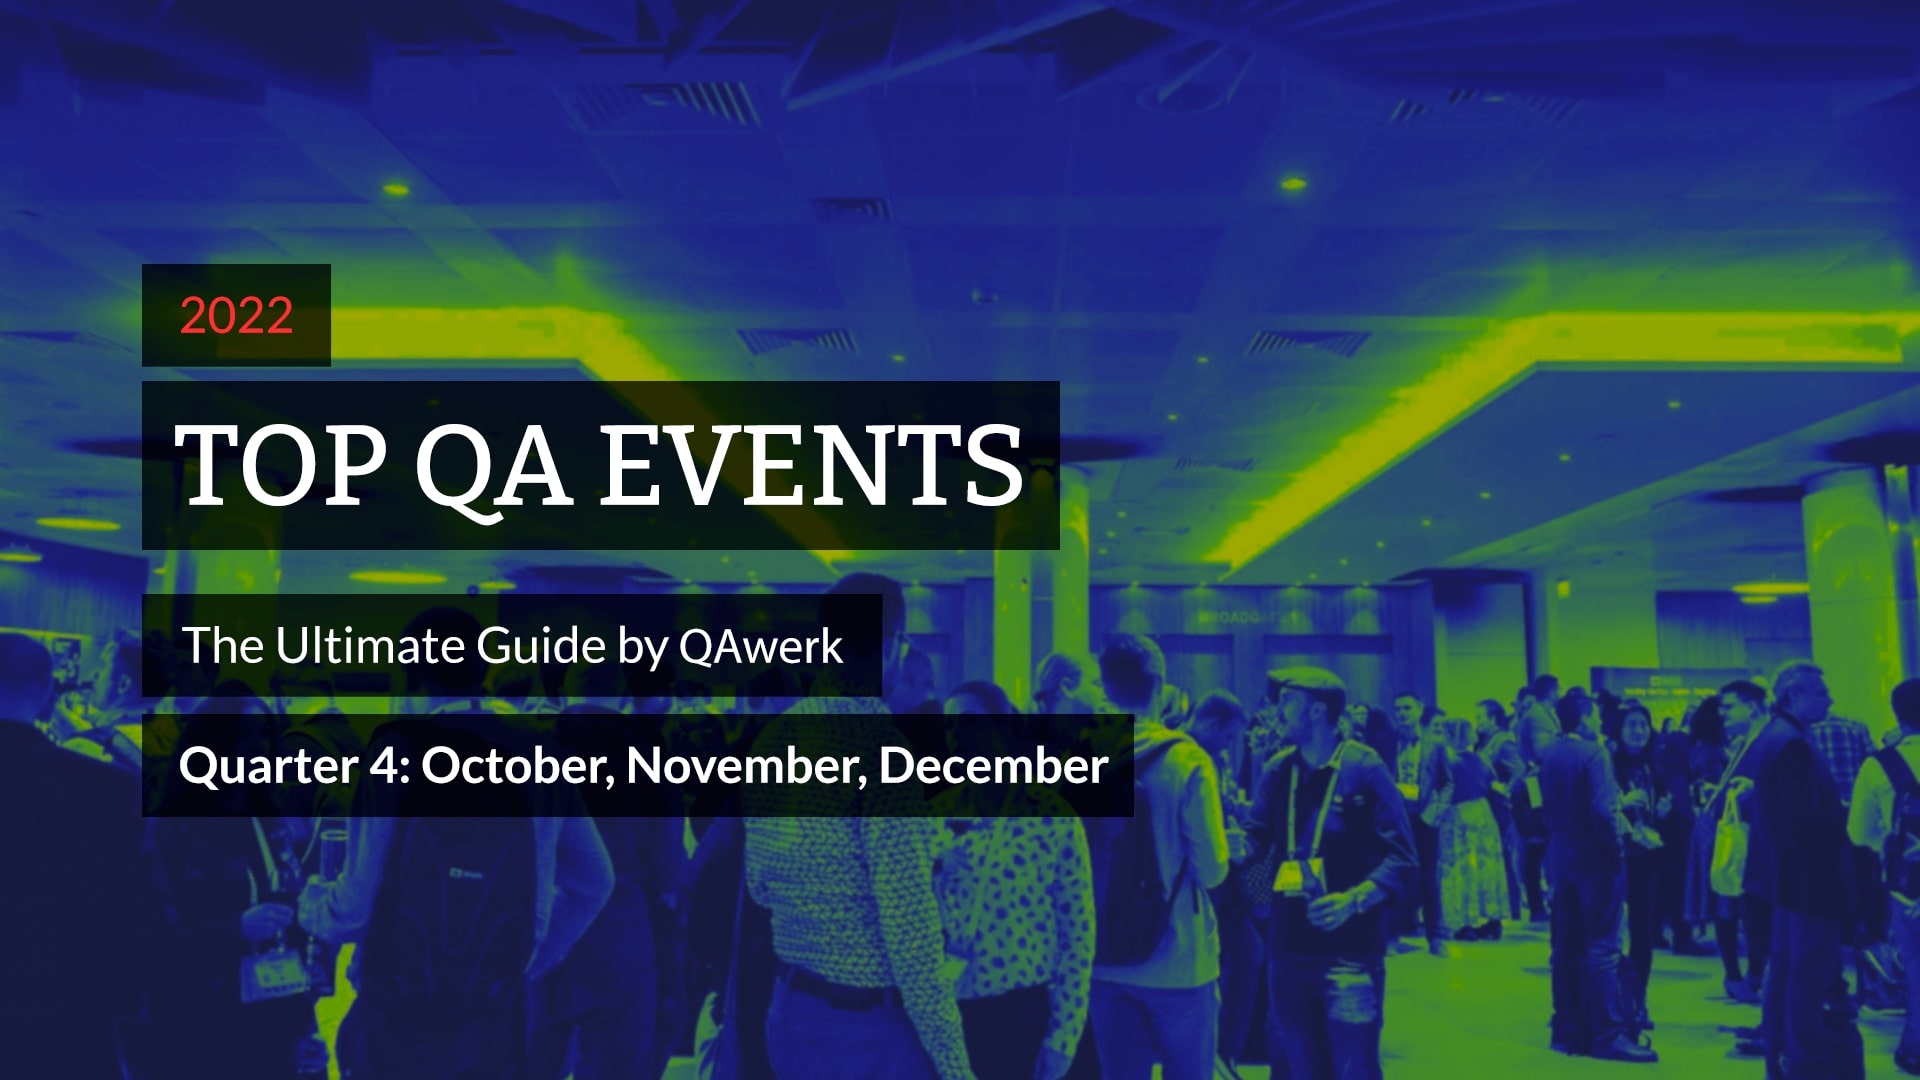 Top QA events in 2022: Quarter 4 Ultimate Guide